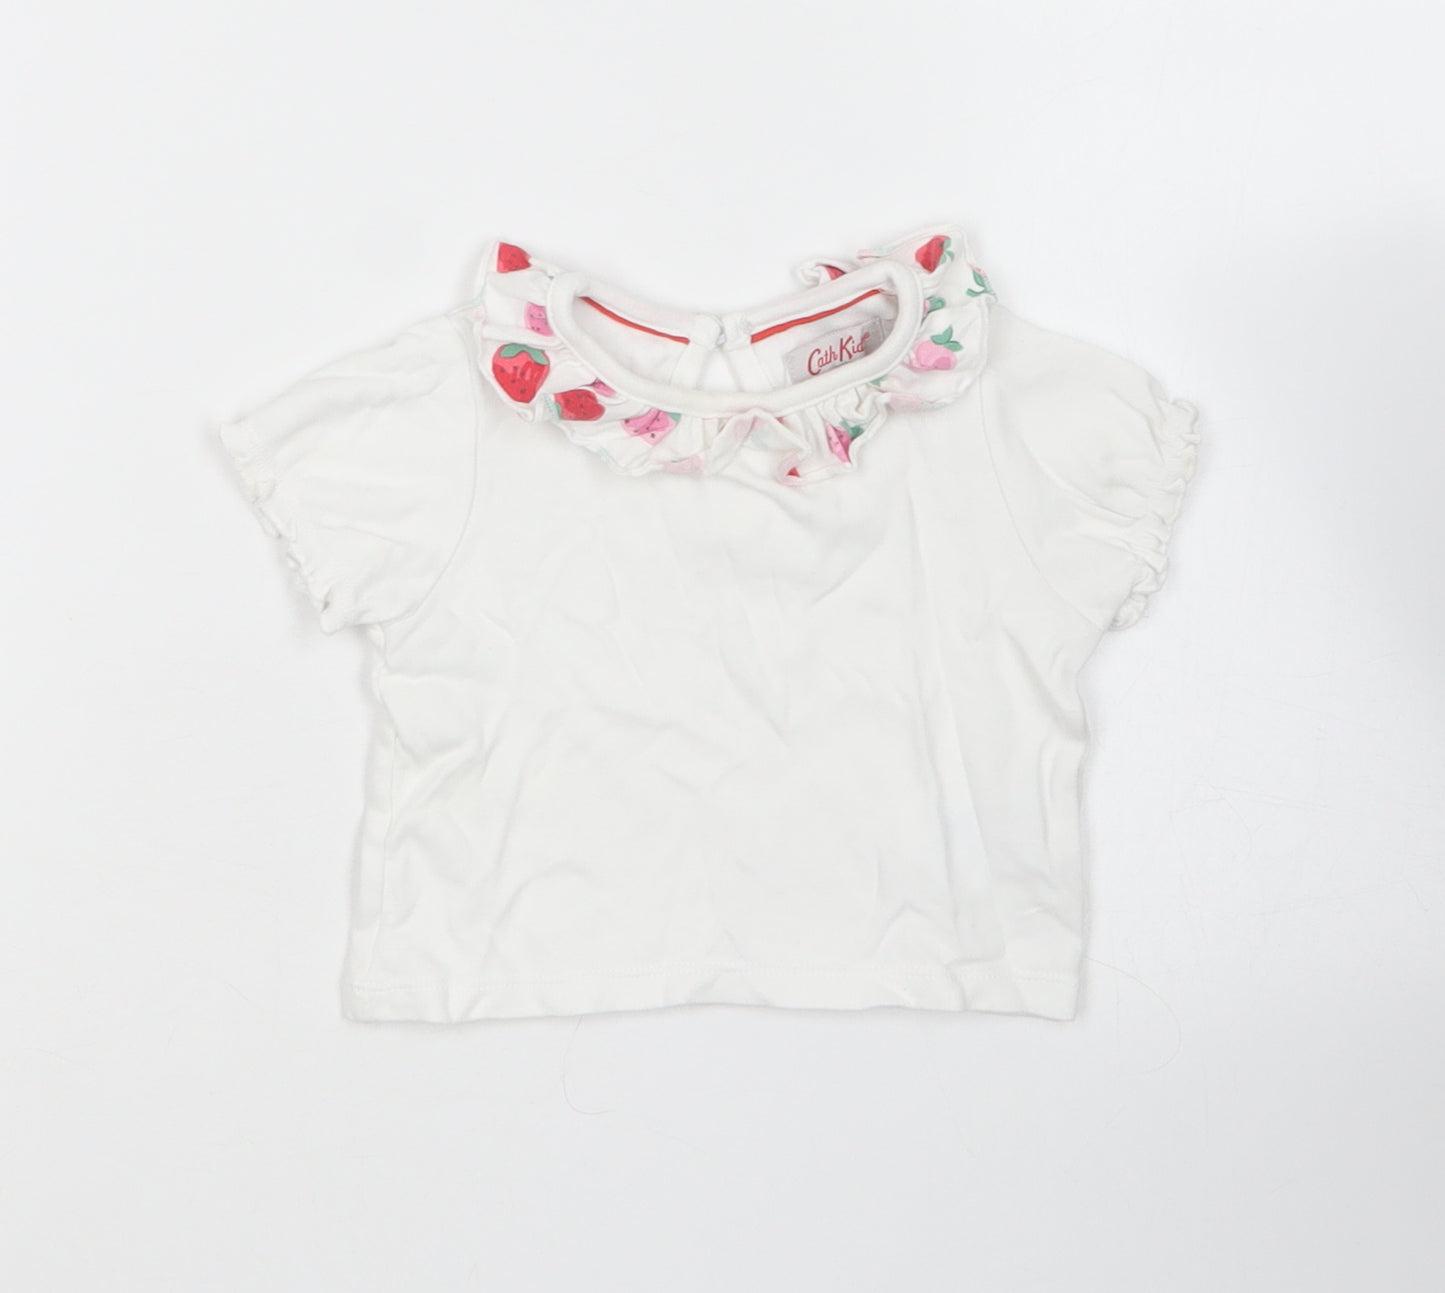 Cath Kidston Baby White  Cotton Basic T-Shirt Size 3-6 Months Collared